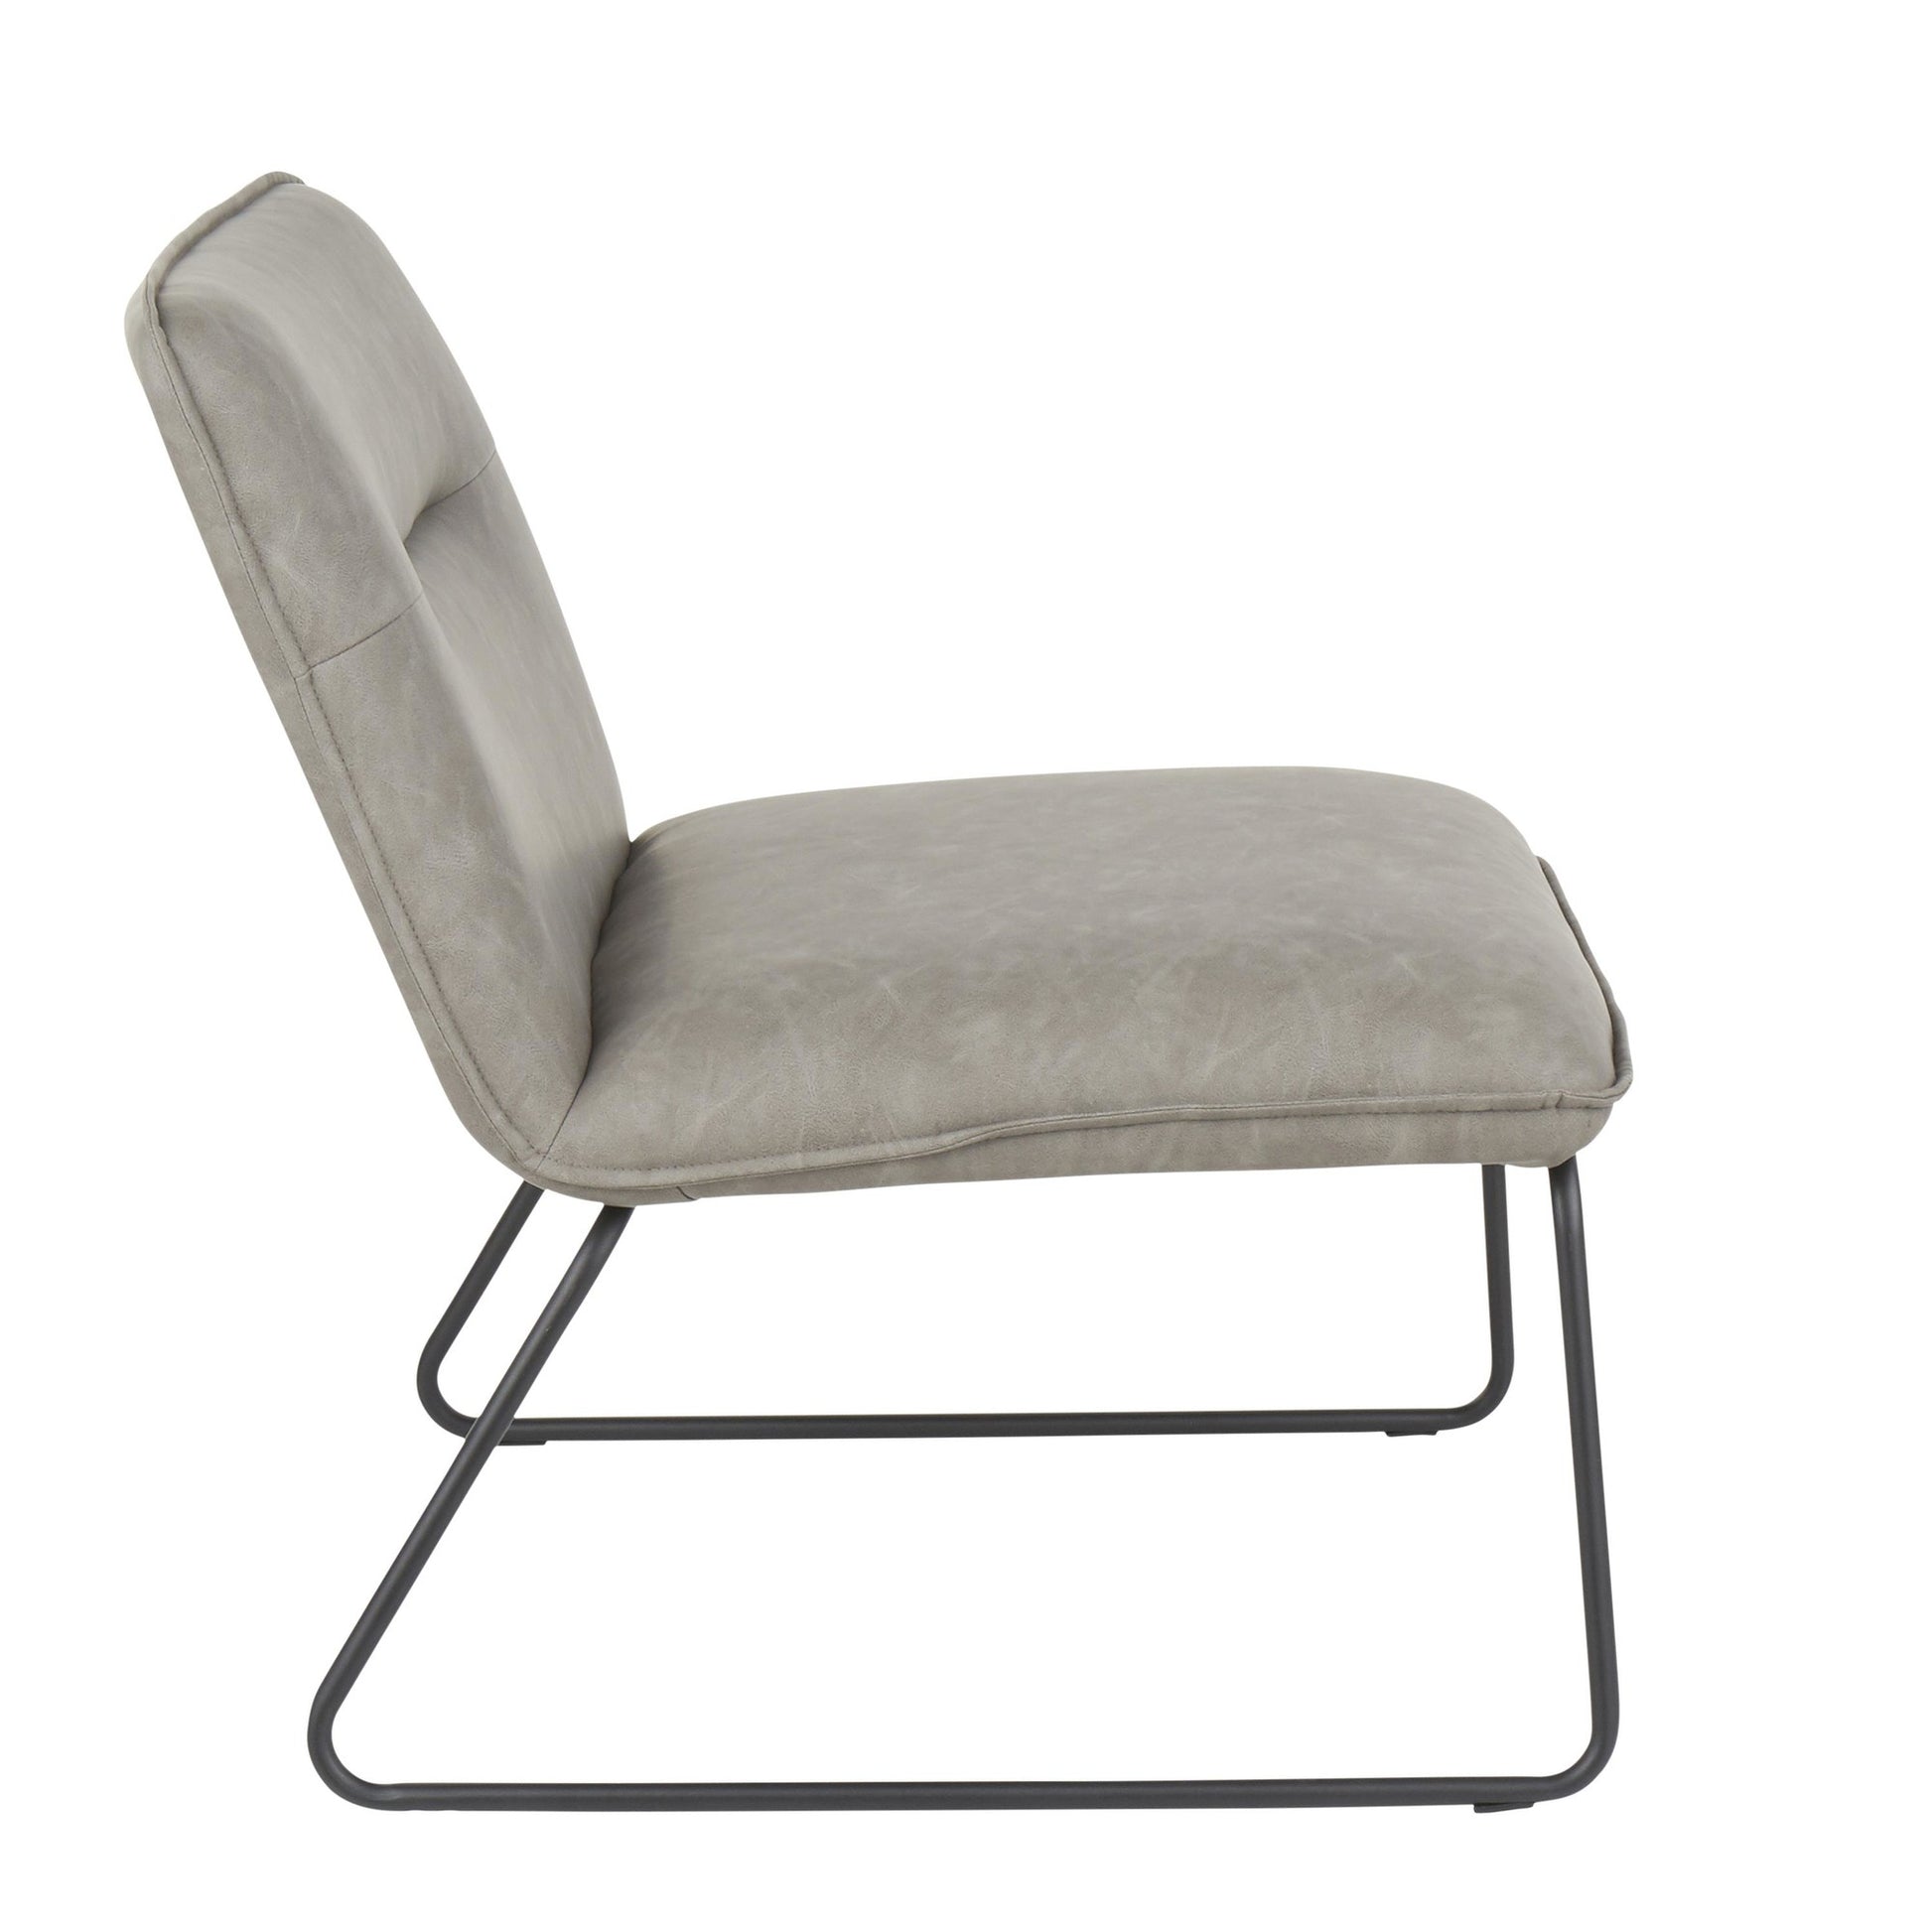 LumiSource Casper Accent Chair-17